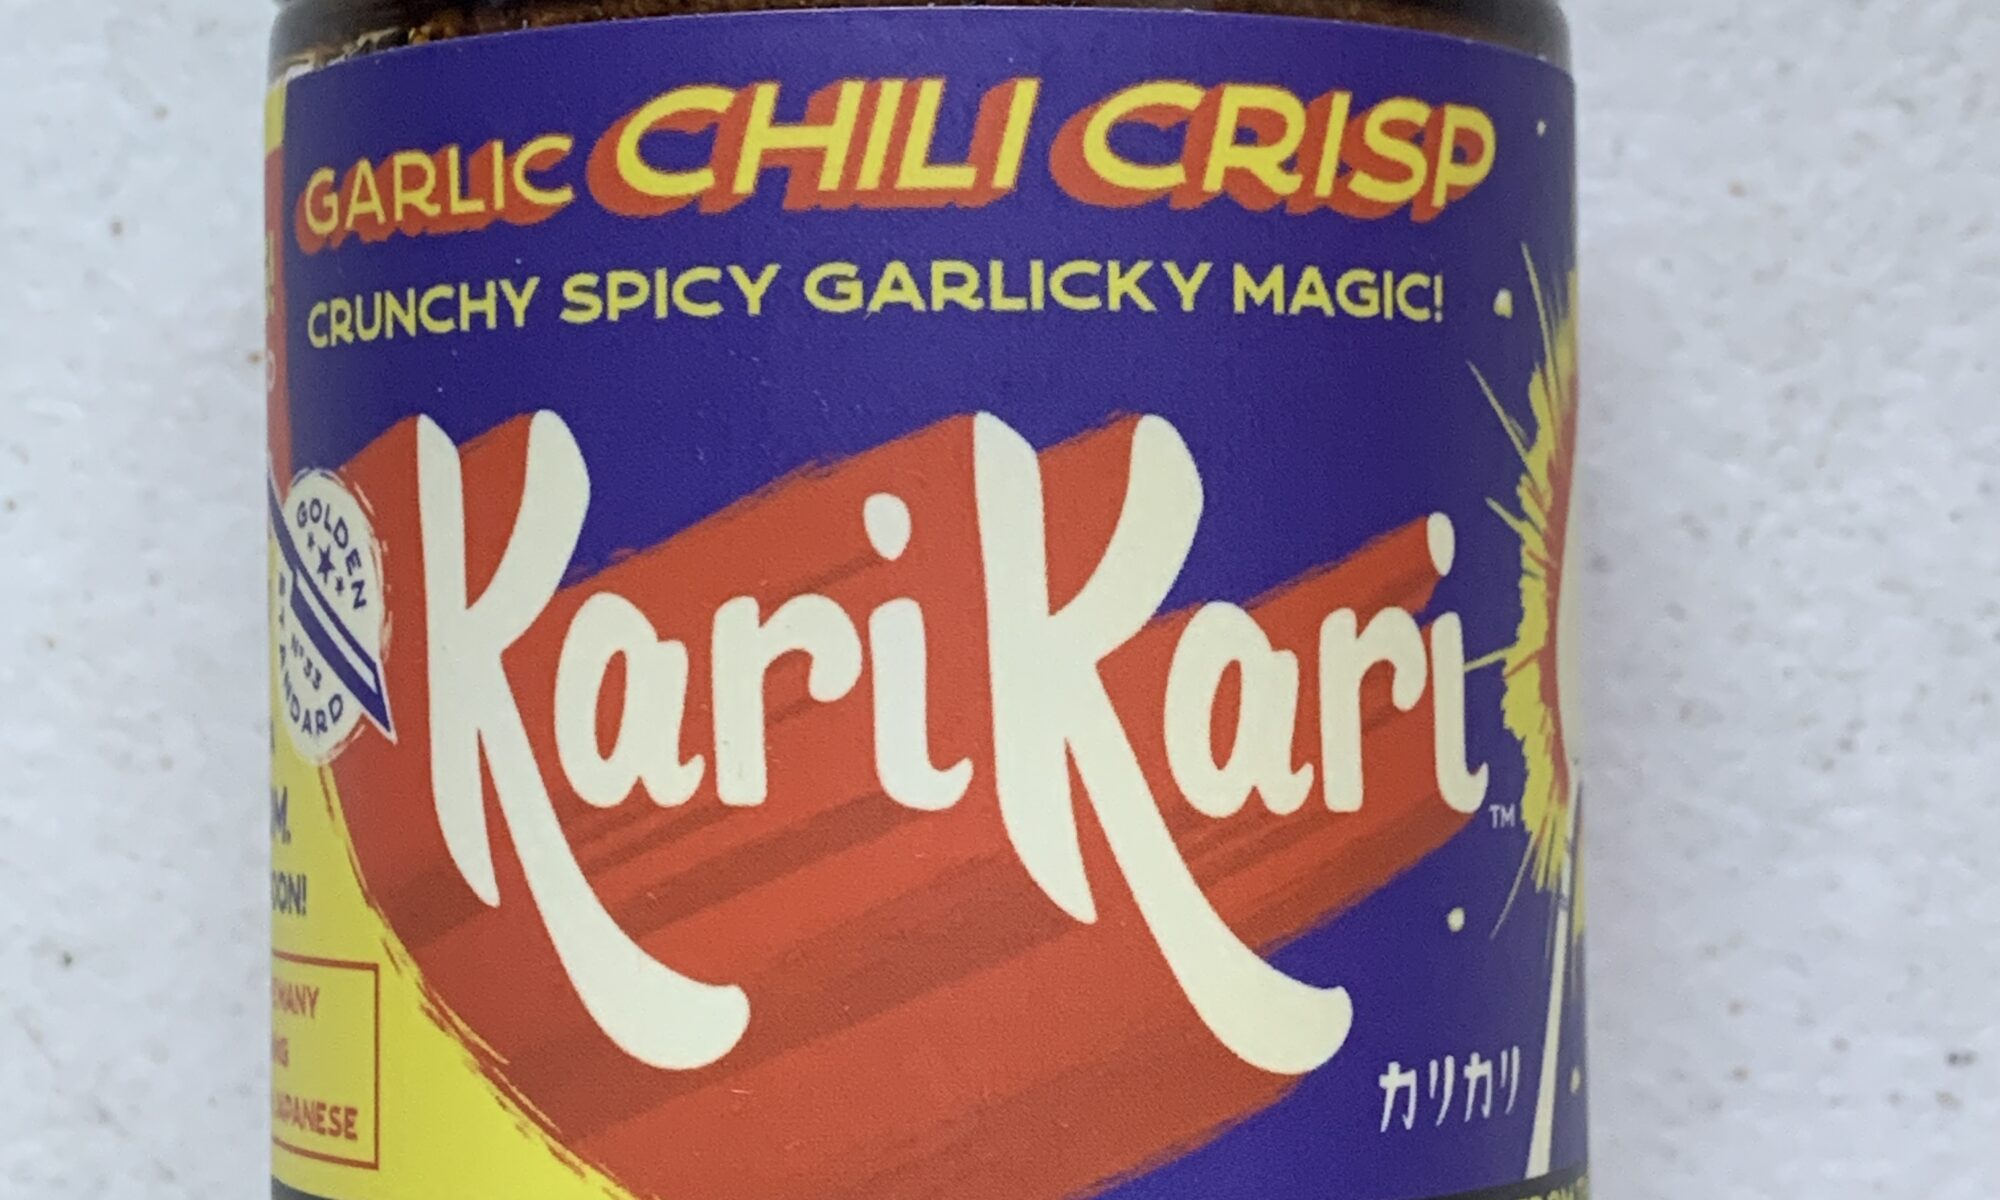 Image of the front of a jar of KariKari Garlic Chili Crisp, 6 oz, Glass Jar